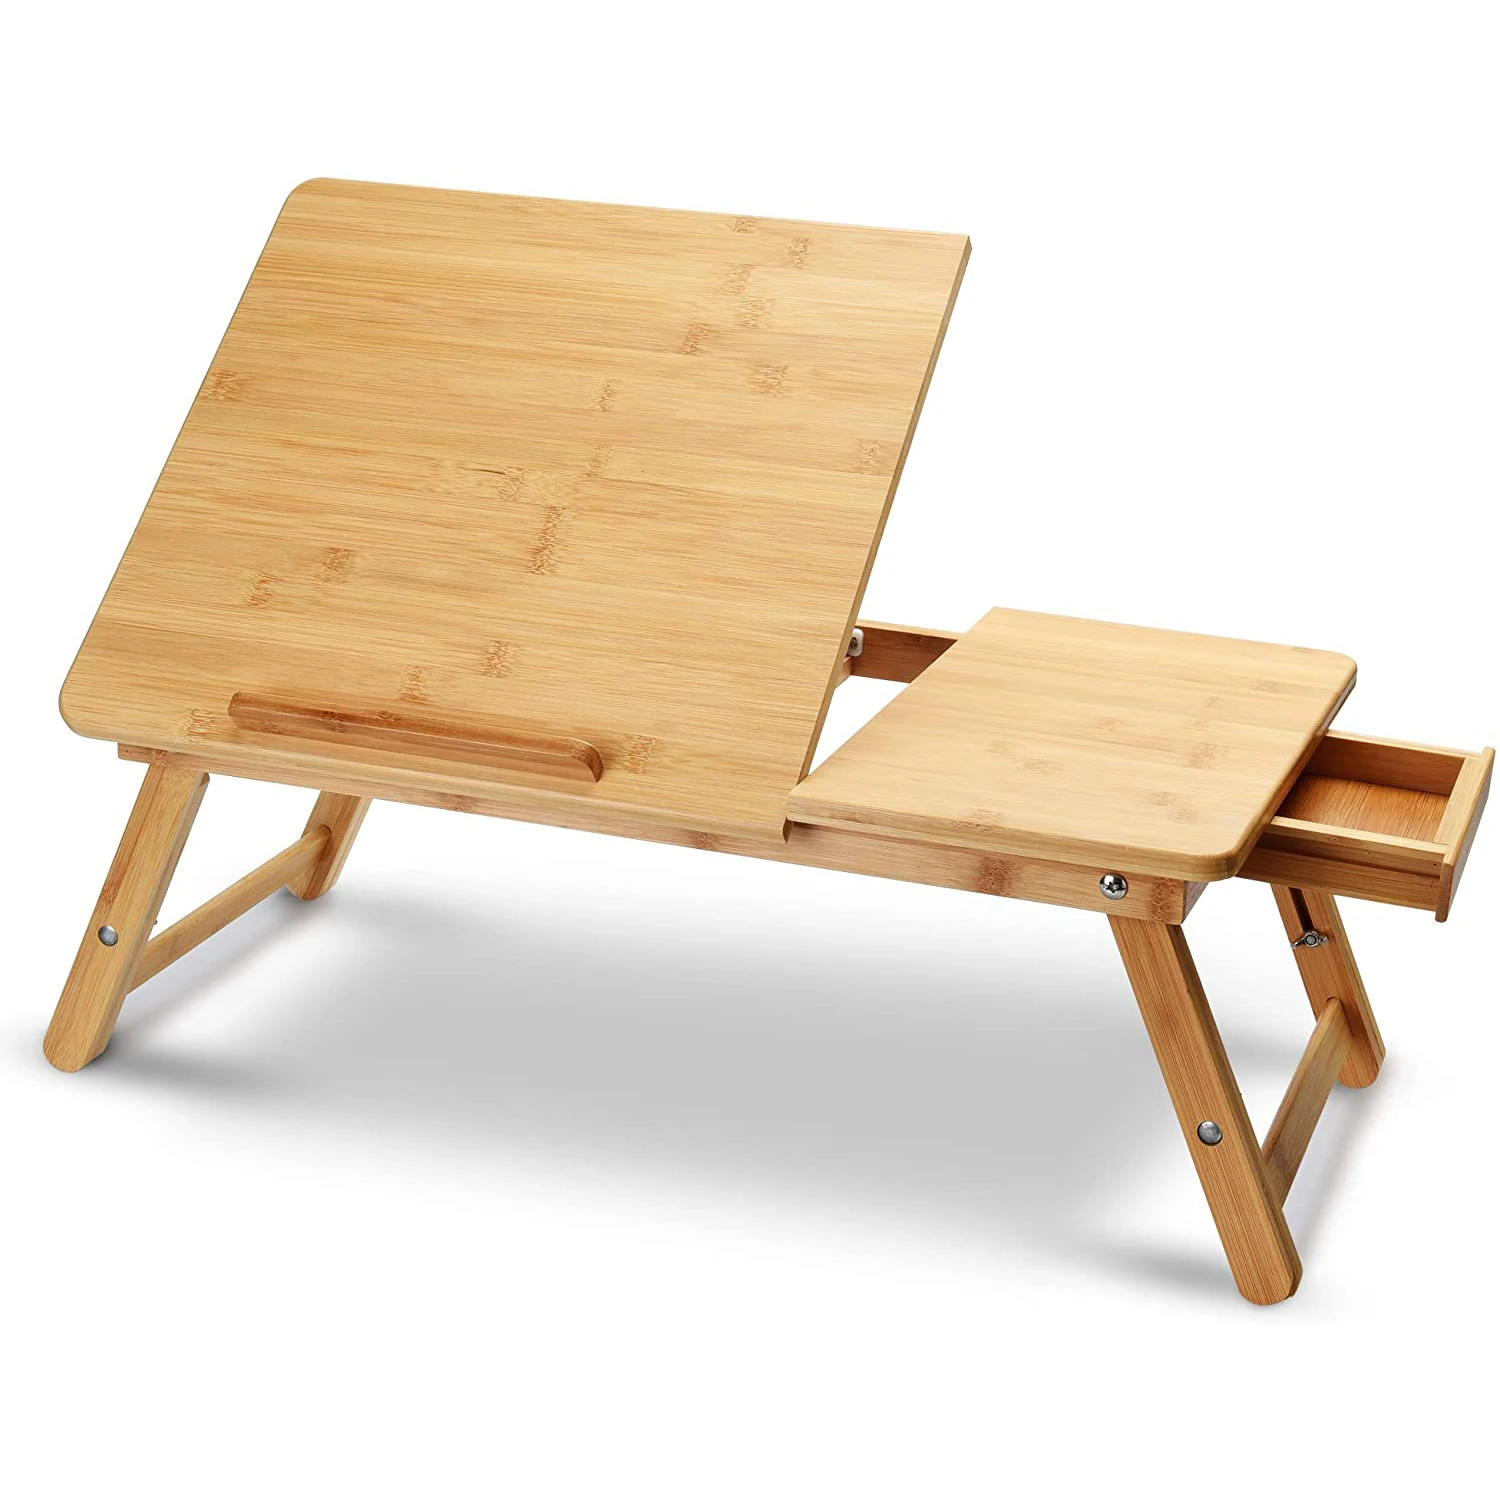 Bamboowood столик для ноутбука